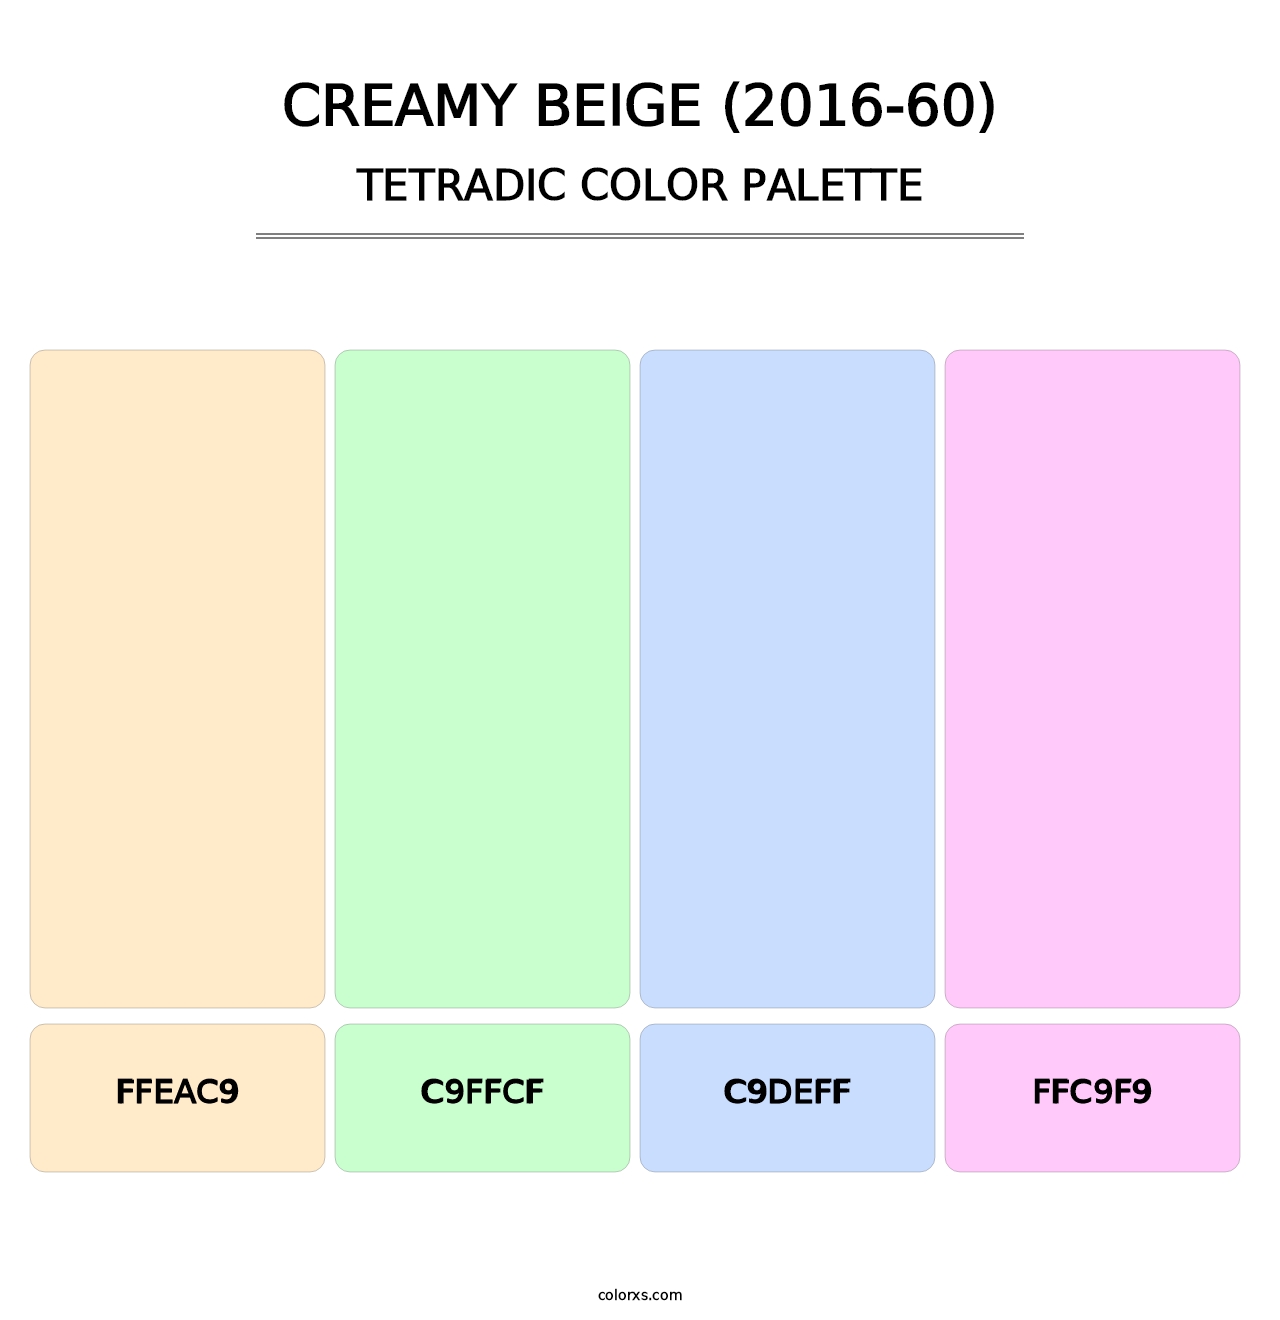 Creamy Beige (2016-60) - Tetradic Color Palette